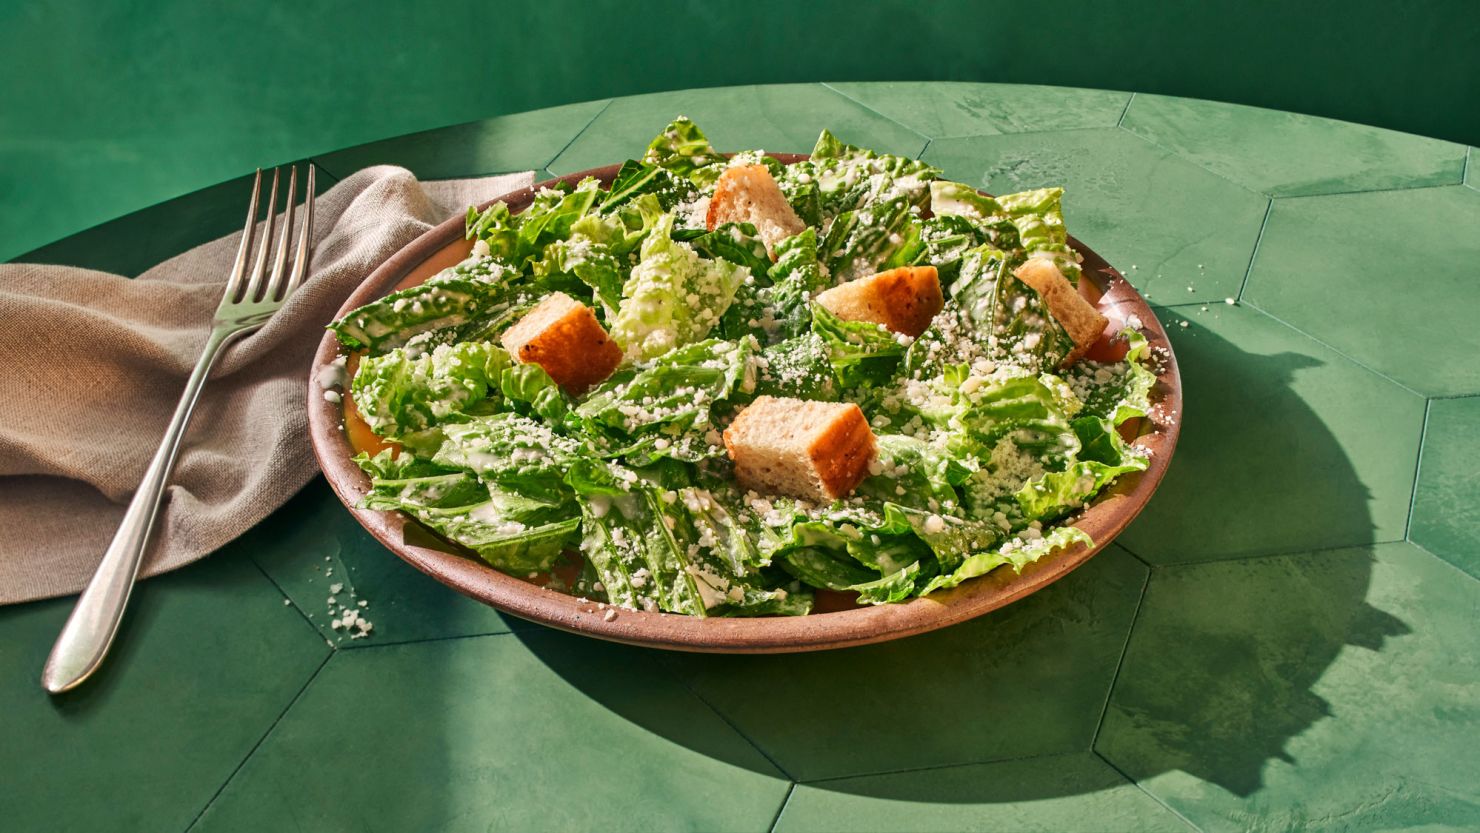 Panera's new "Roman Empire" menu, inspired by TikTok, includes a Caesar salad.